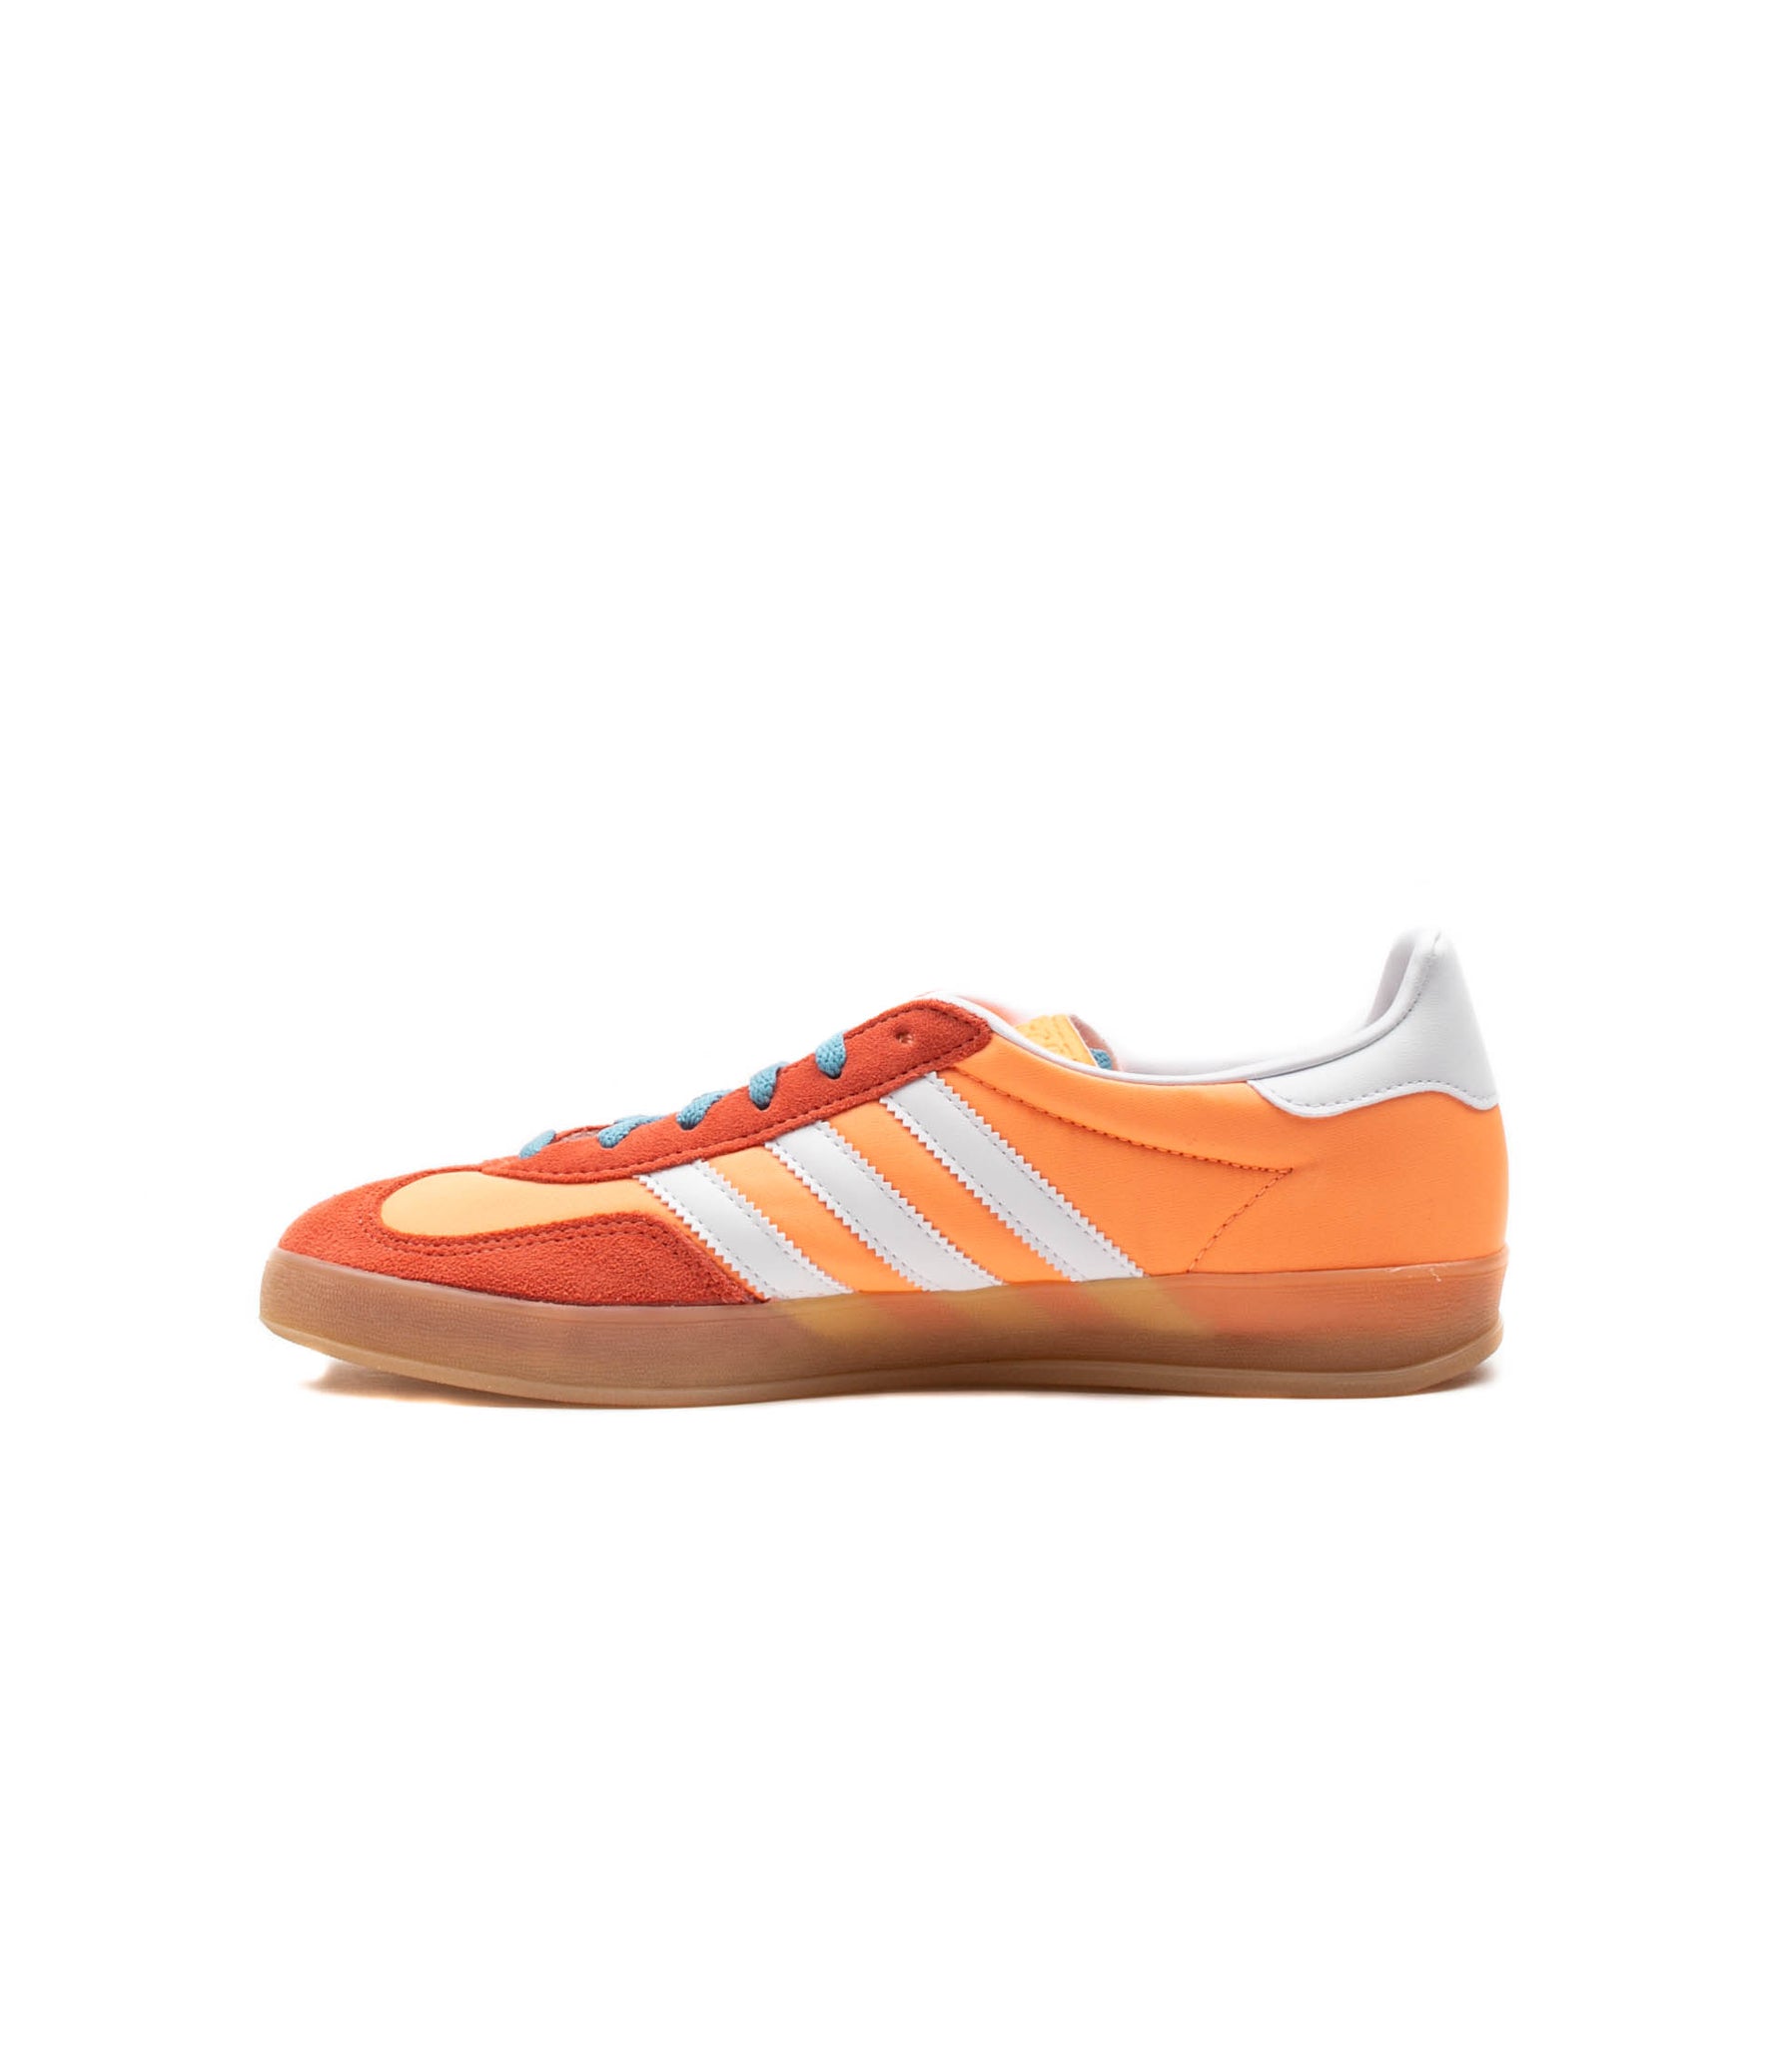 Adidas Gazelle Indoor Orange Unisex